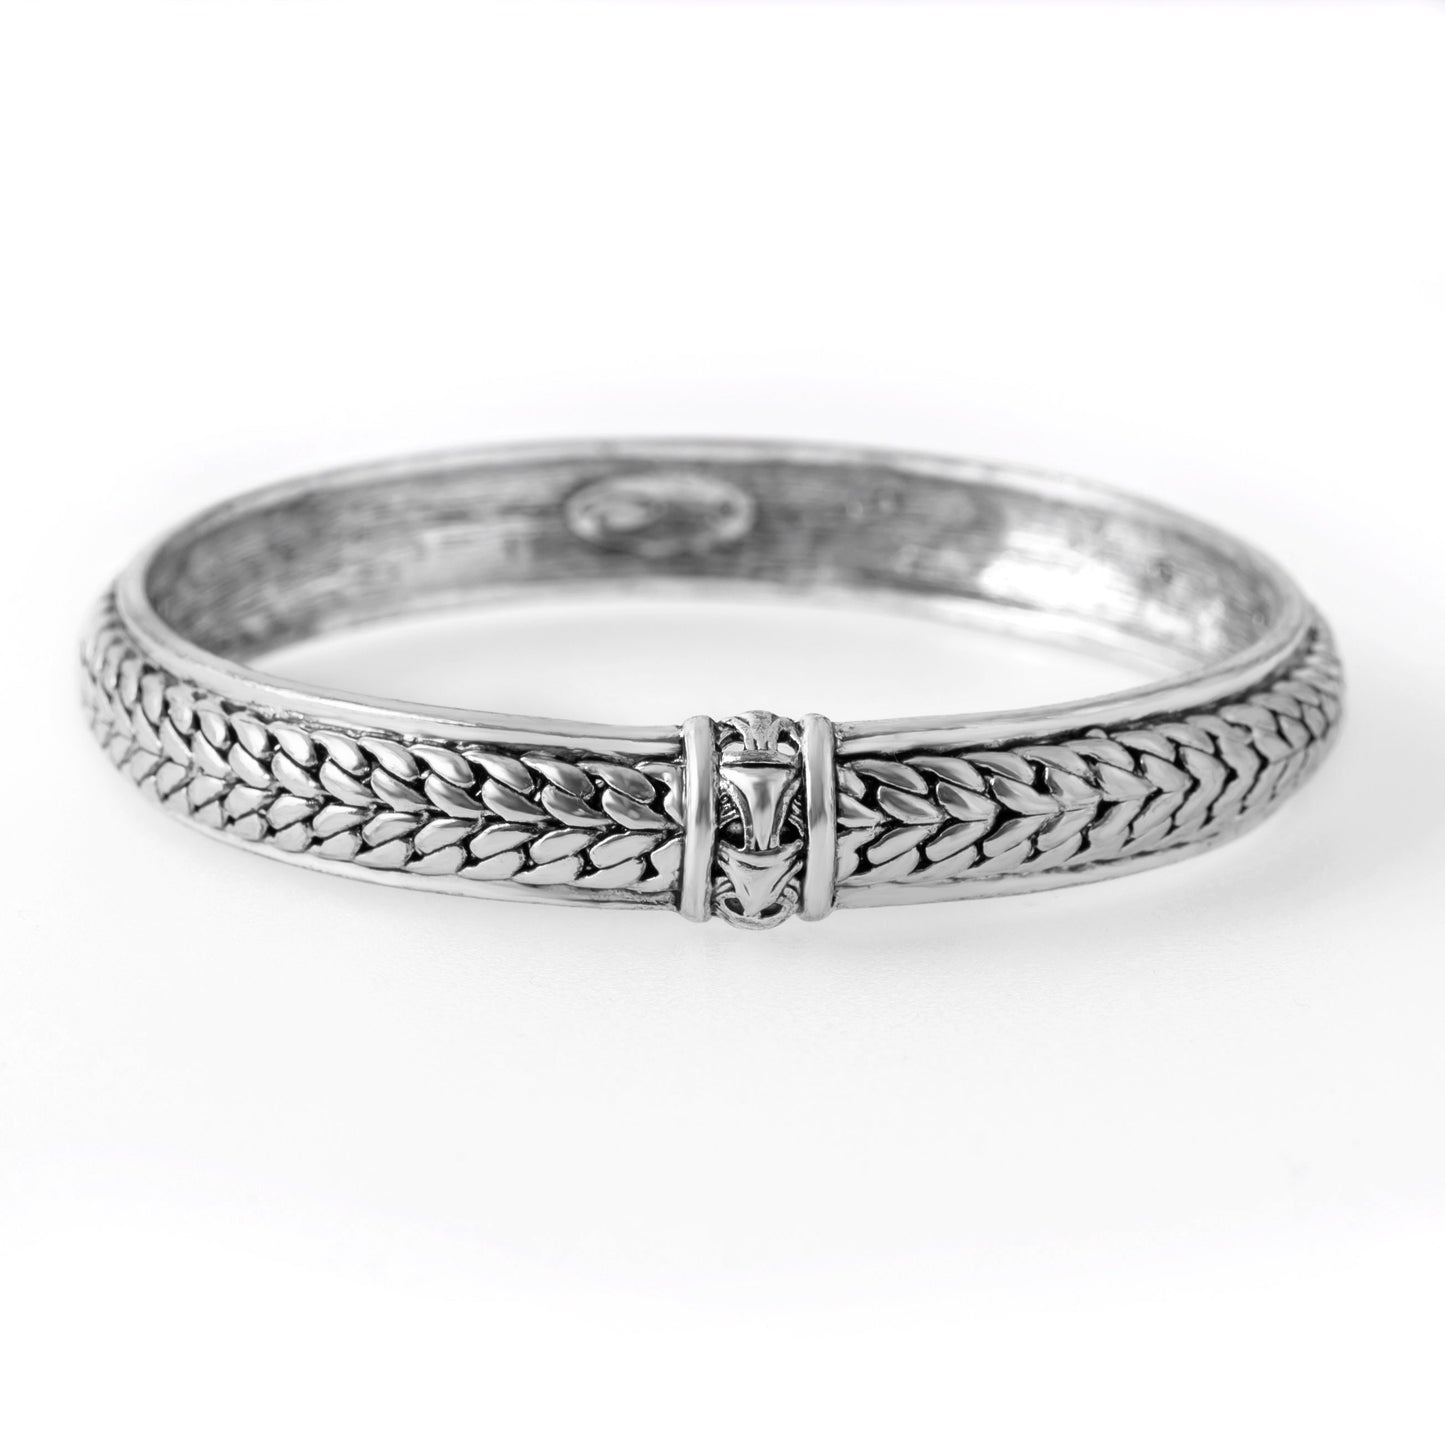 Vintage Ring Oscar De La Renta Textured Antique Silver Tone Bangle Bracelet #OSB-633-W Size: undefined